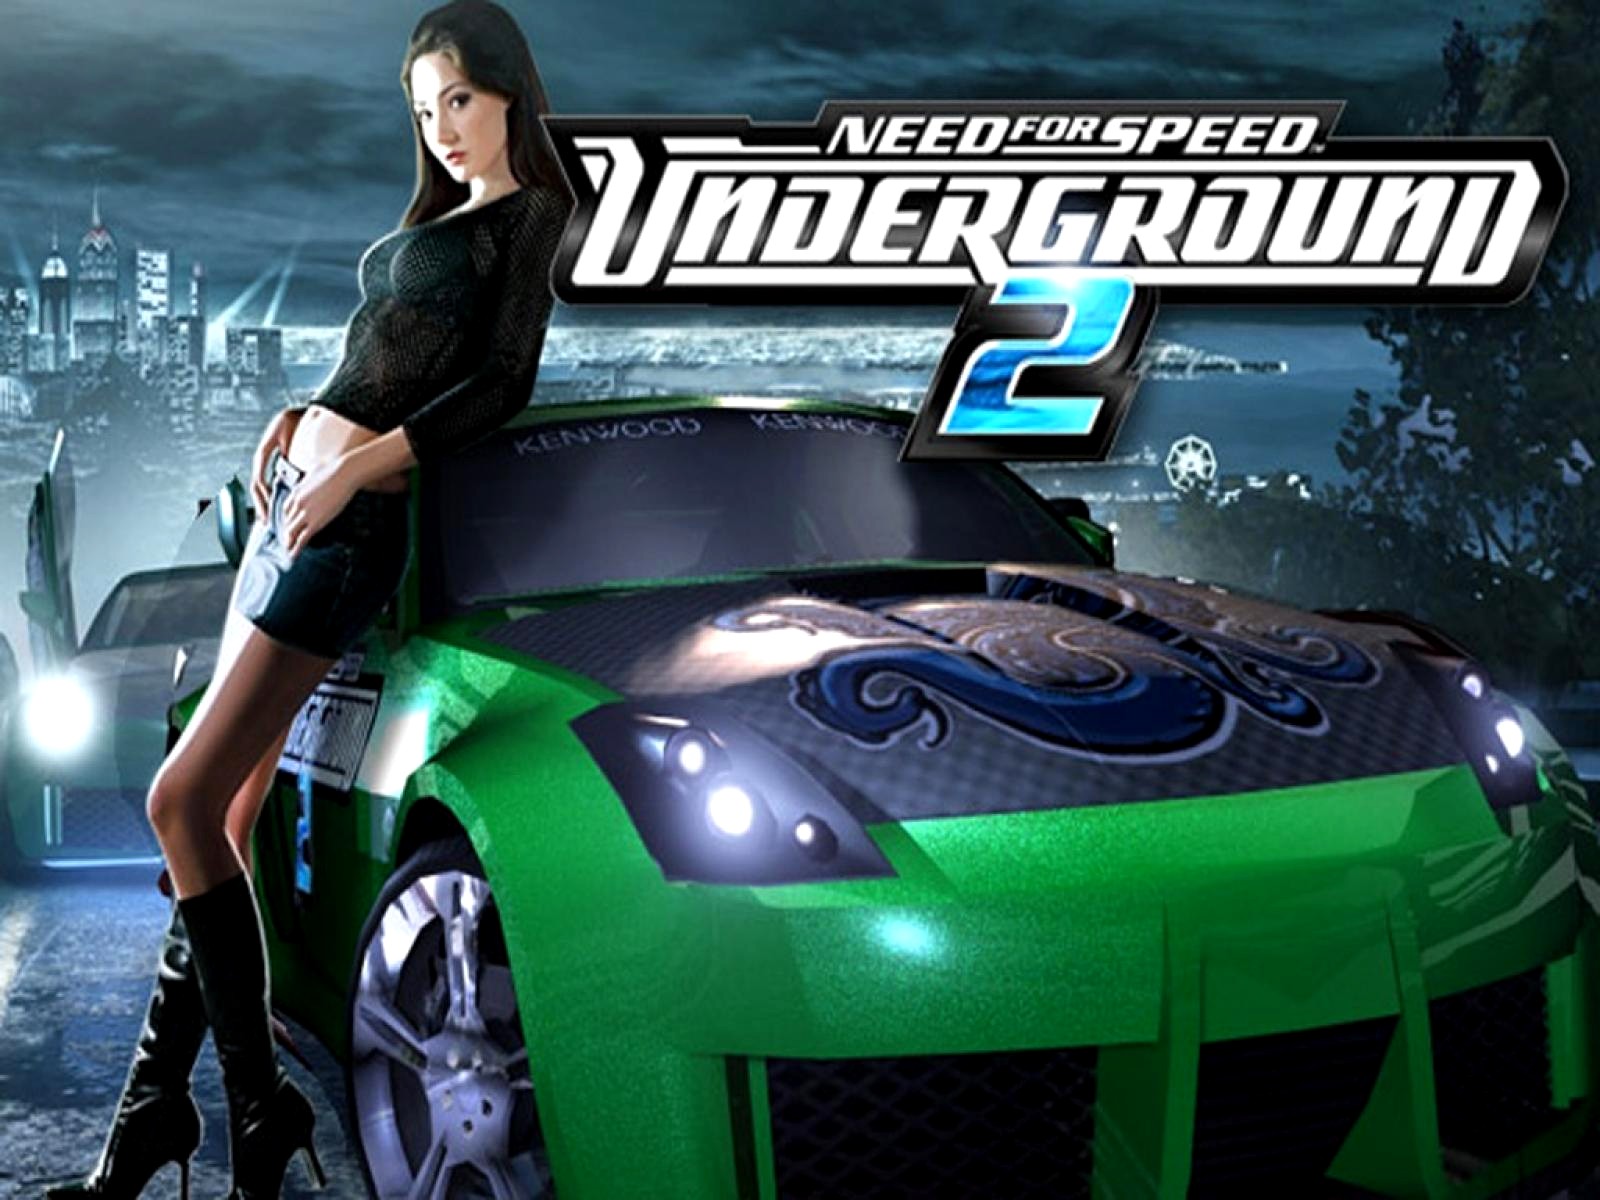 Speed gaming 2. Нфс андеграунд 2. Need for Speed Underground 2 диск. Нфс андеграунд 2 Постер. Need for Speed Underground 2 ps2.